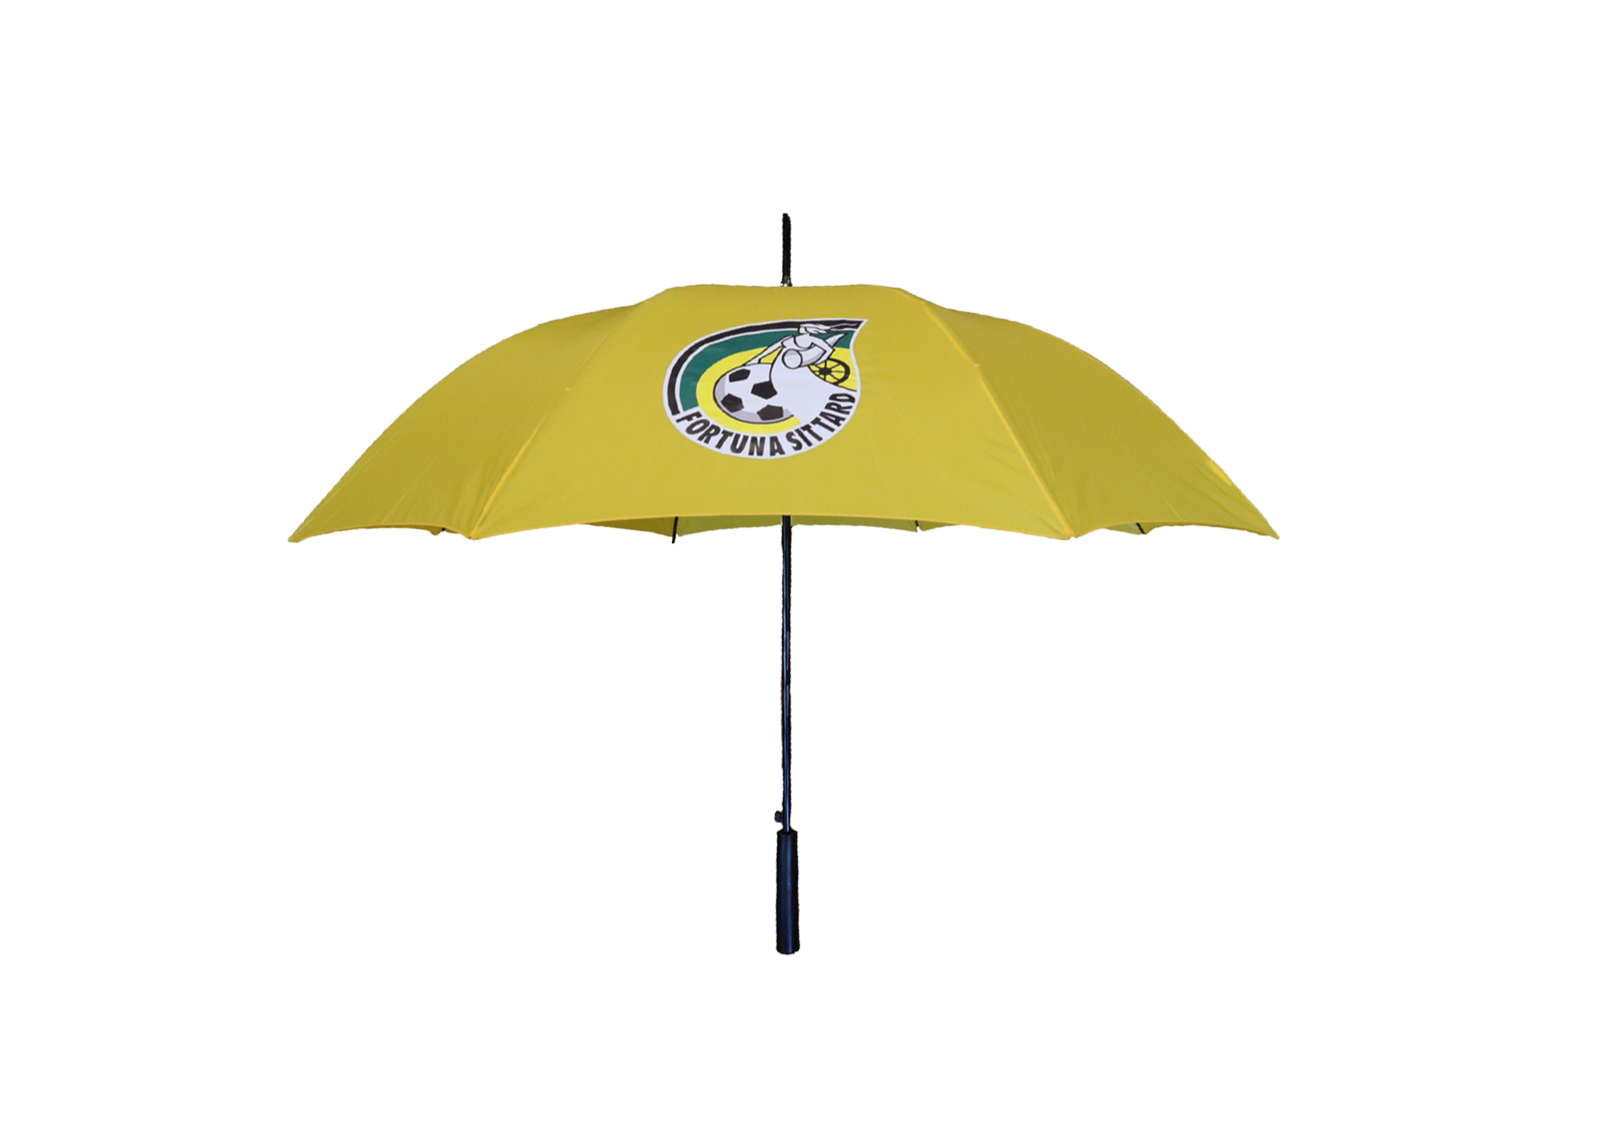 Lichaam aankomen Makkelijker maken Fortuna Sittard Paraplu (geel) | Fortuna Sittard Online Shop